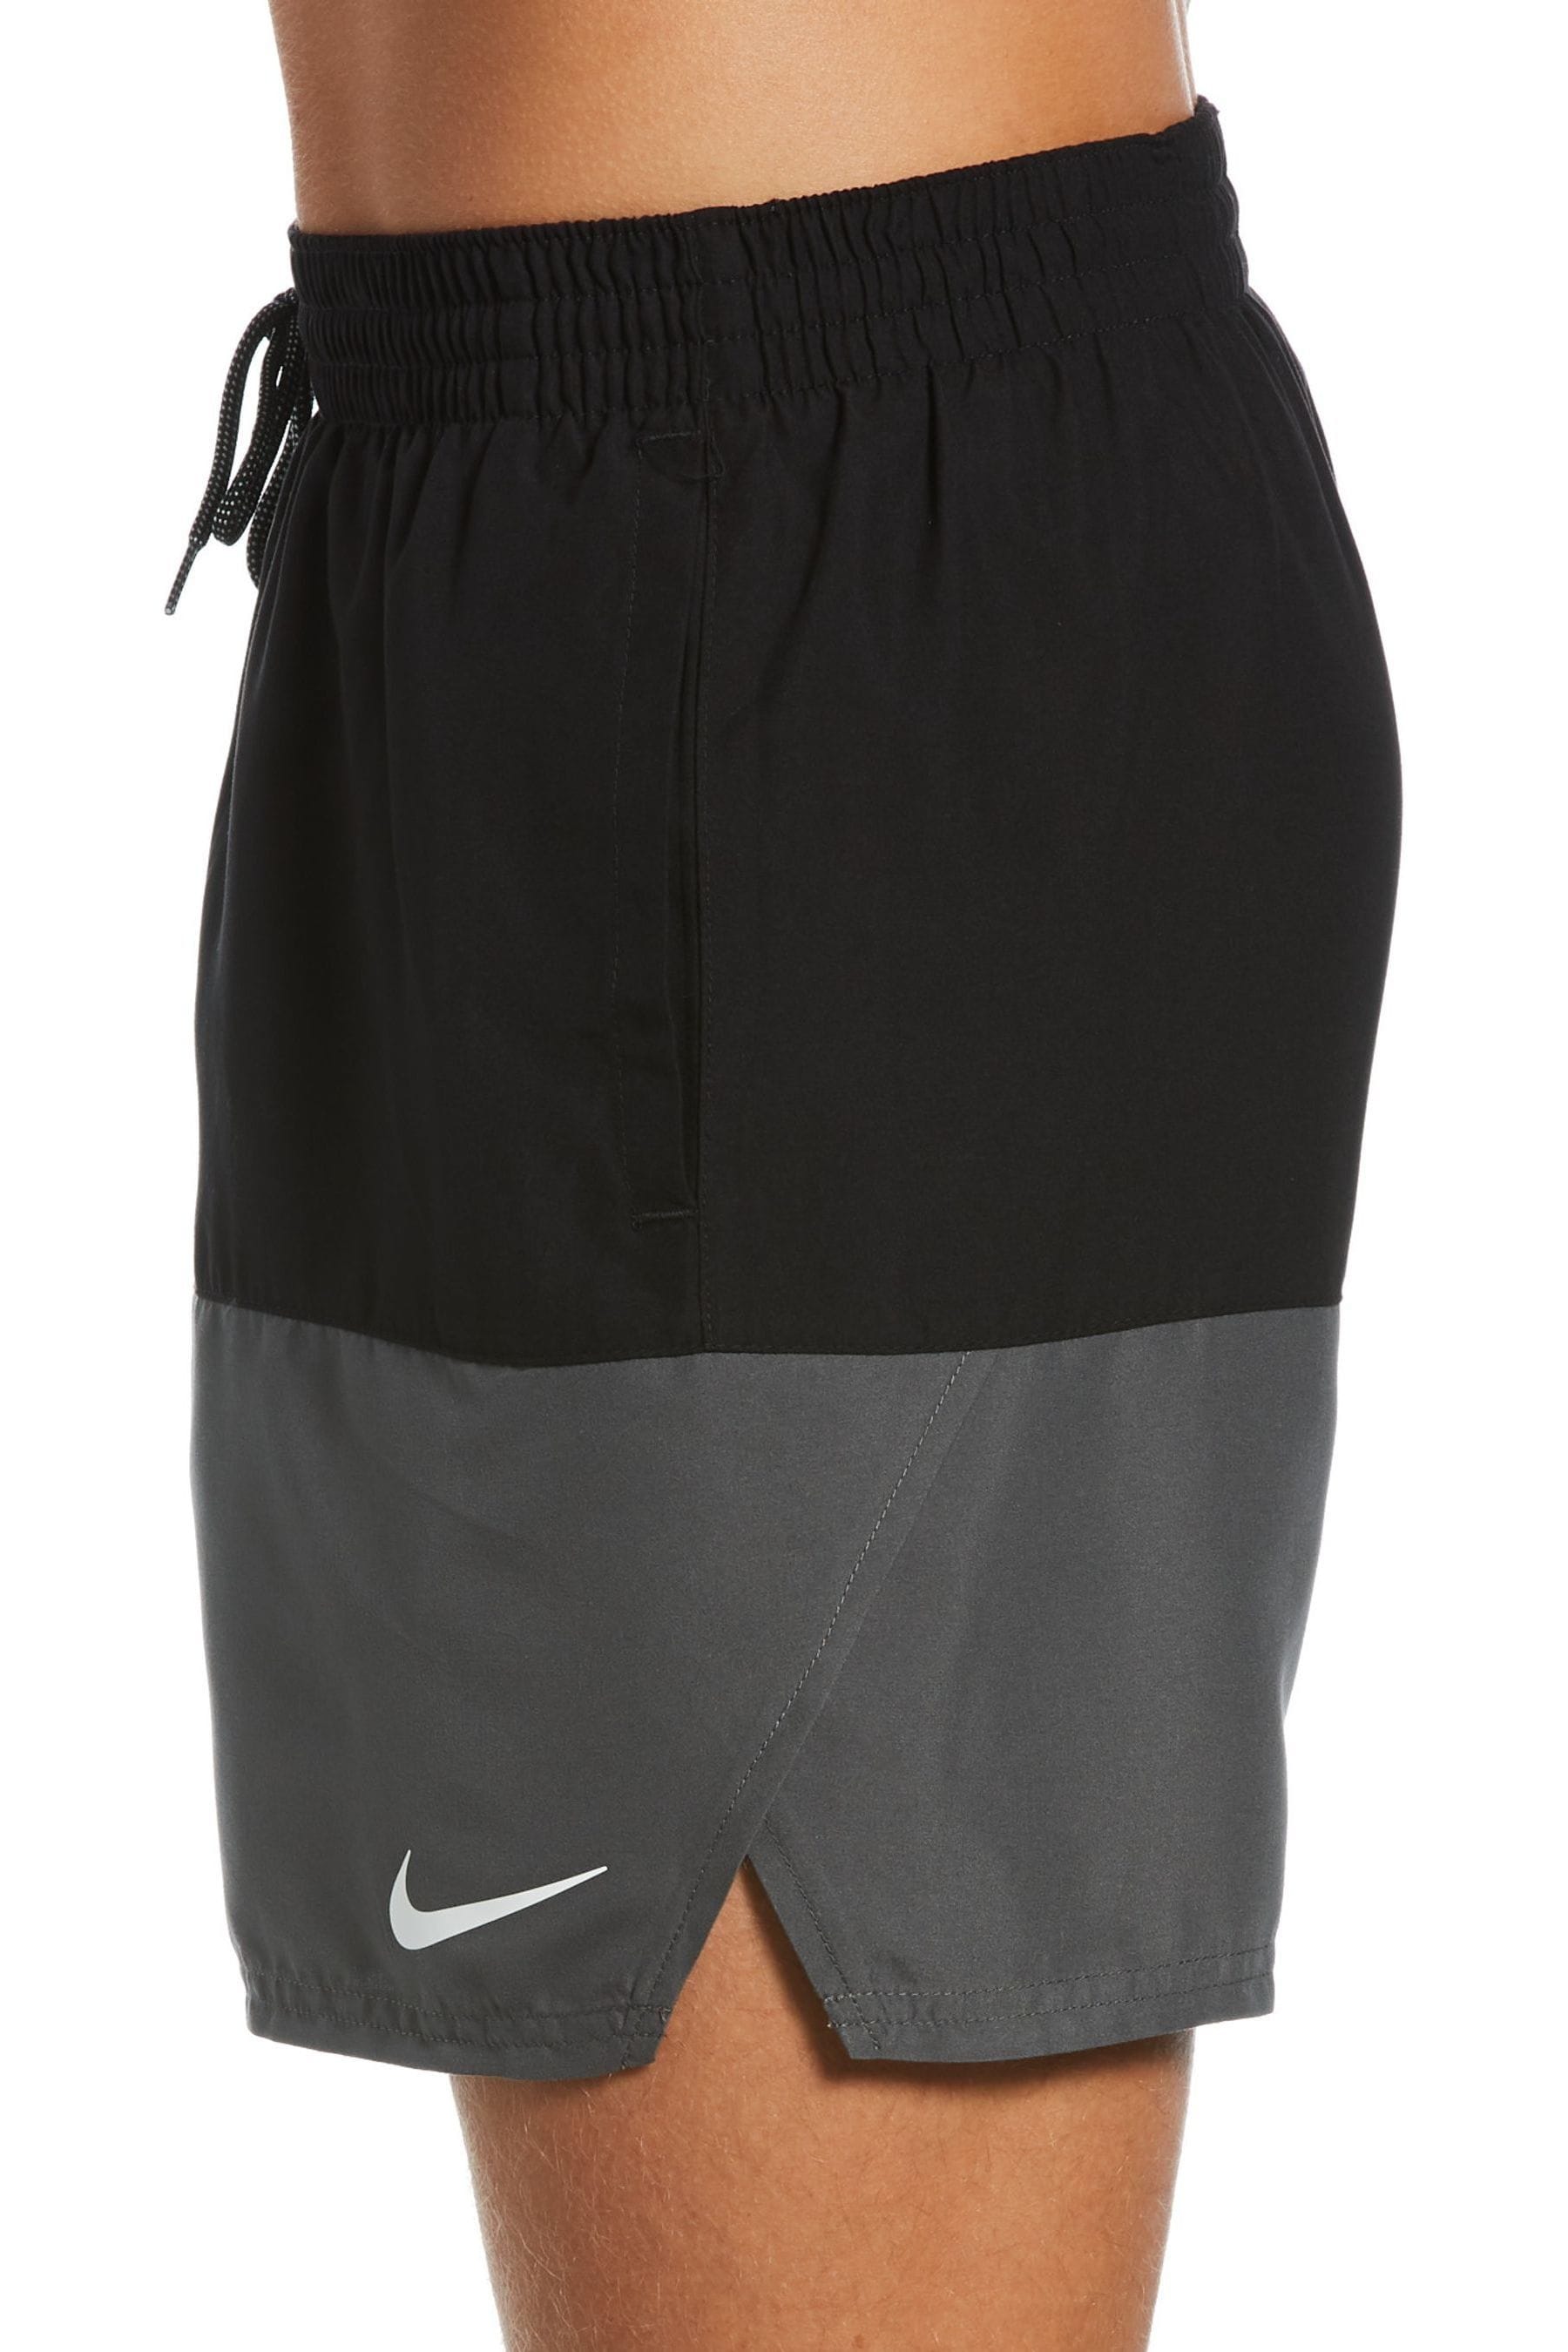 Buy Nike Black Split 5 Inch Volley Swim Shorts from the Next UK online shop